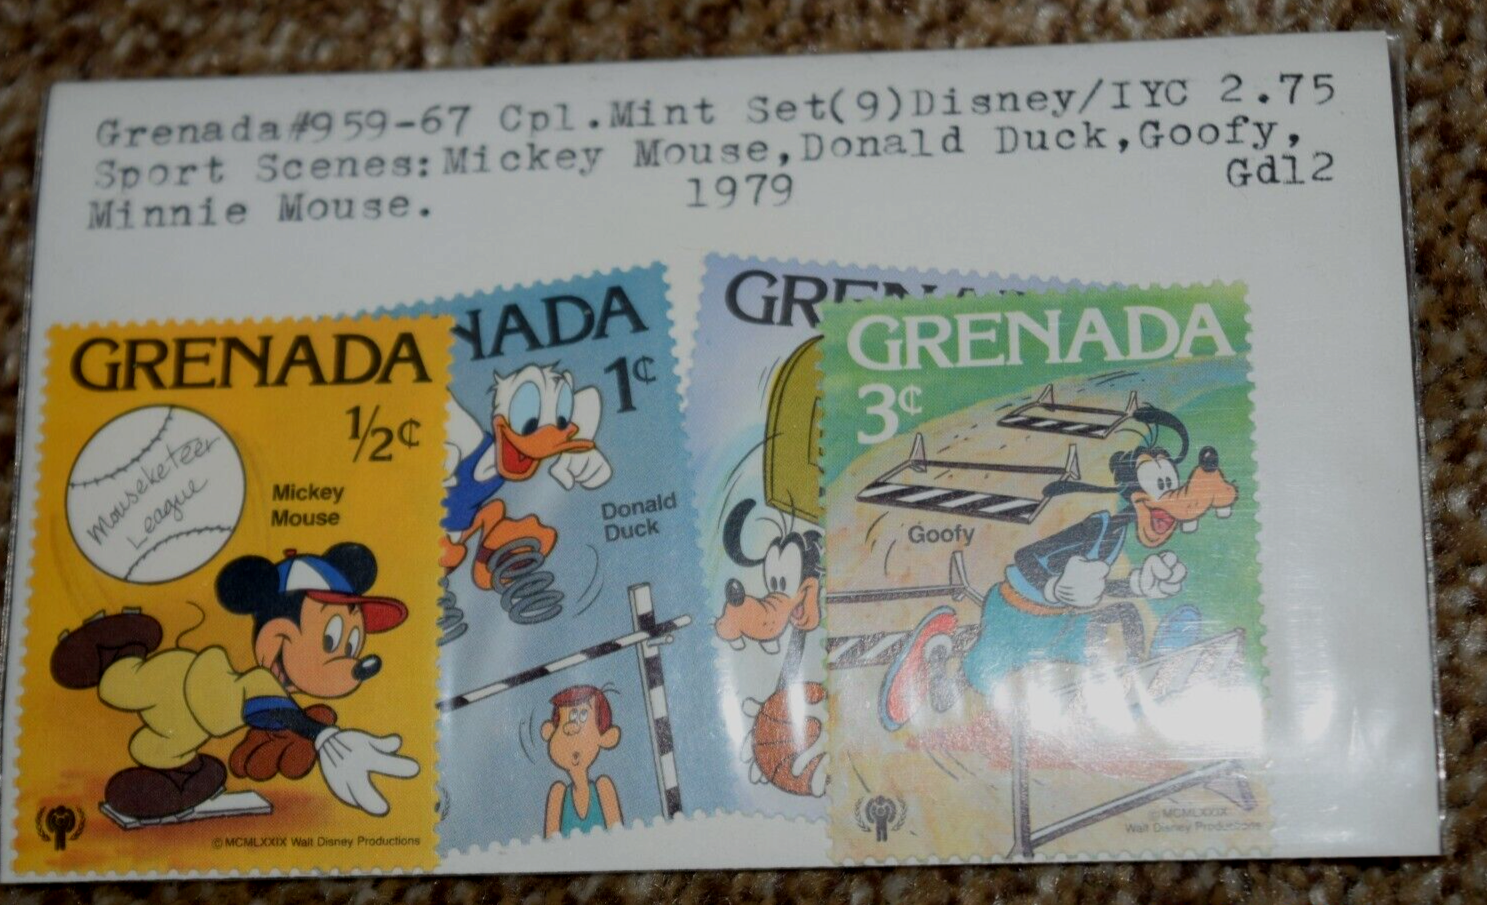 GRENADA, DISNEY Mint Set (9) #959-67, "SPORTS SCENES - Mickey, Goofy,"  1979 Без бренда